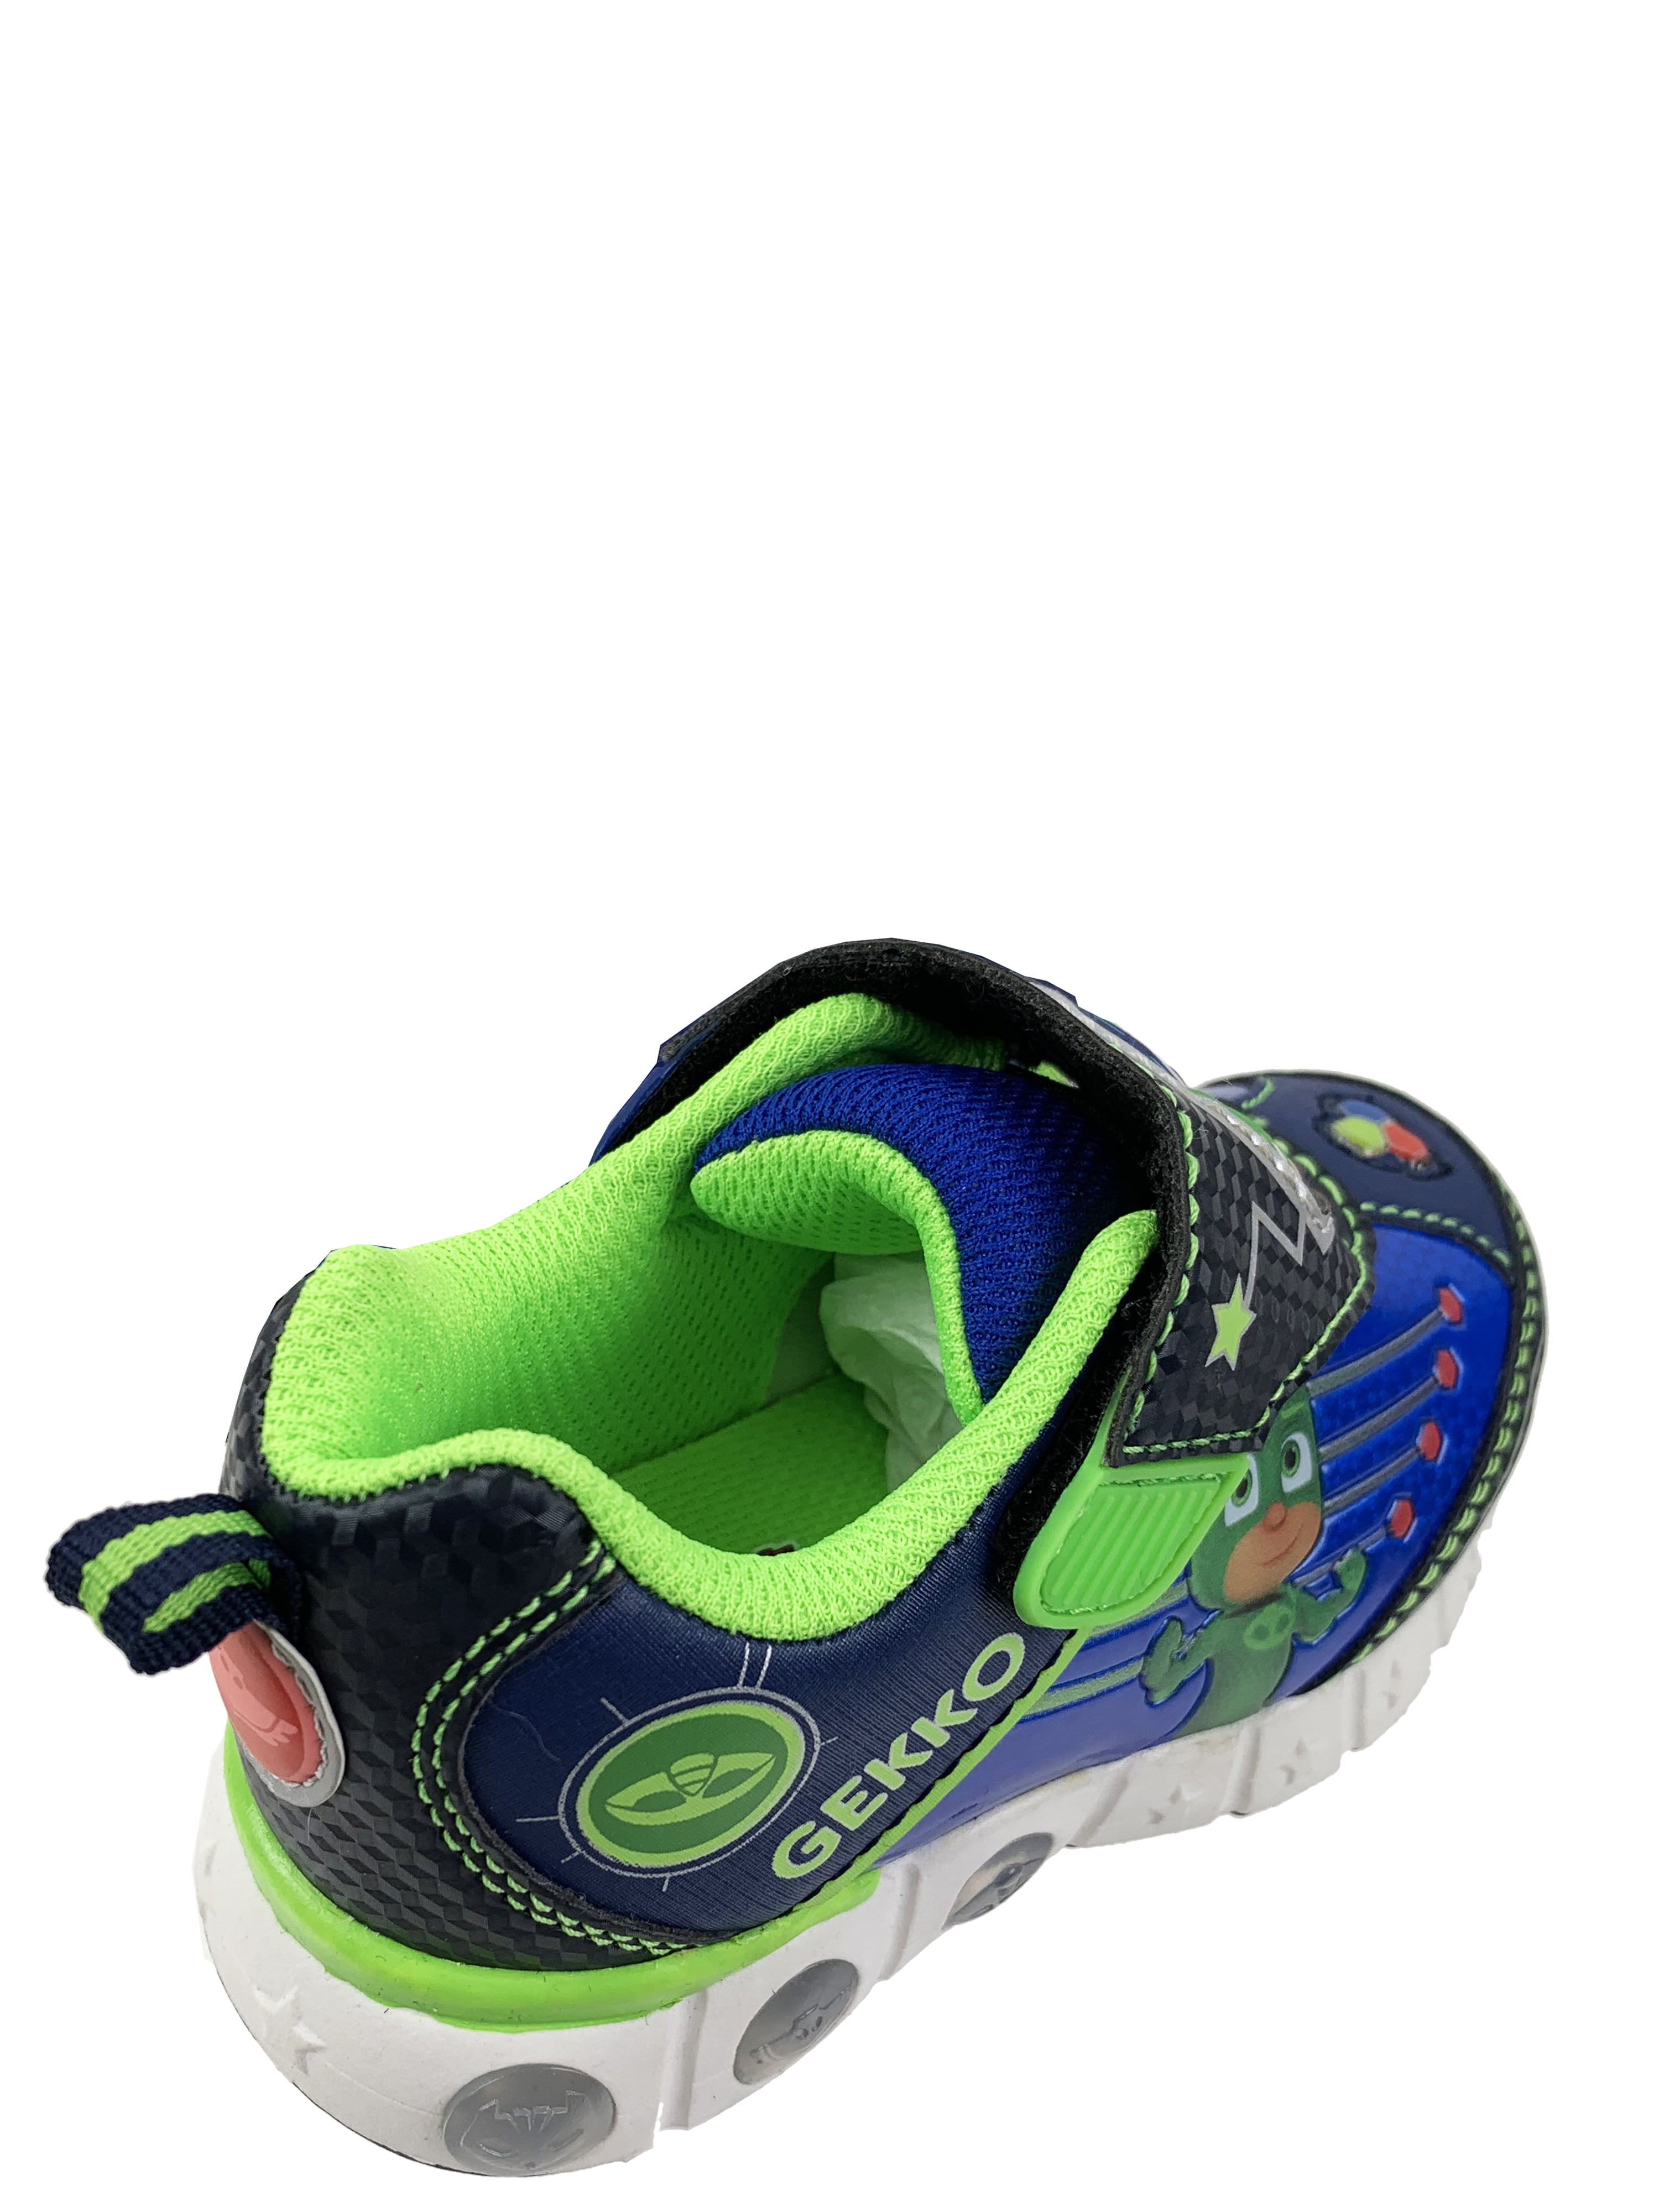 P J Masks Multi coloured Hi-Top Canvas Trainers Sports Shoes Sizes 6-11.5 Child 